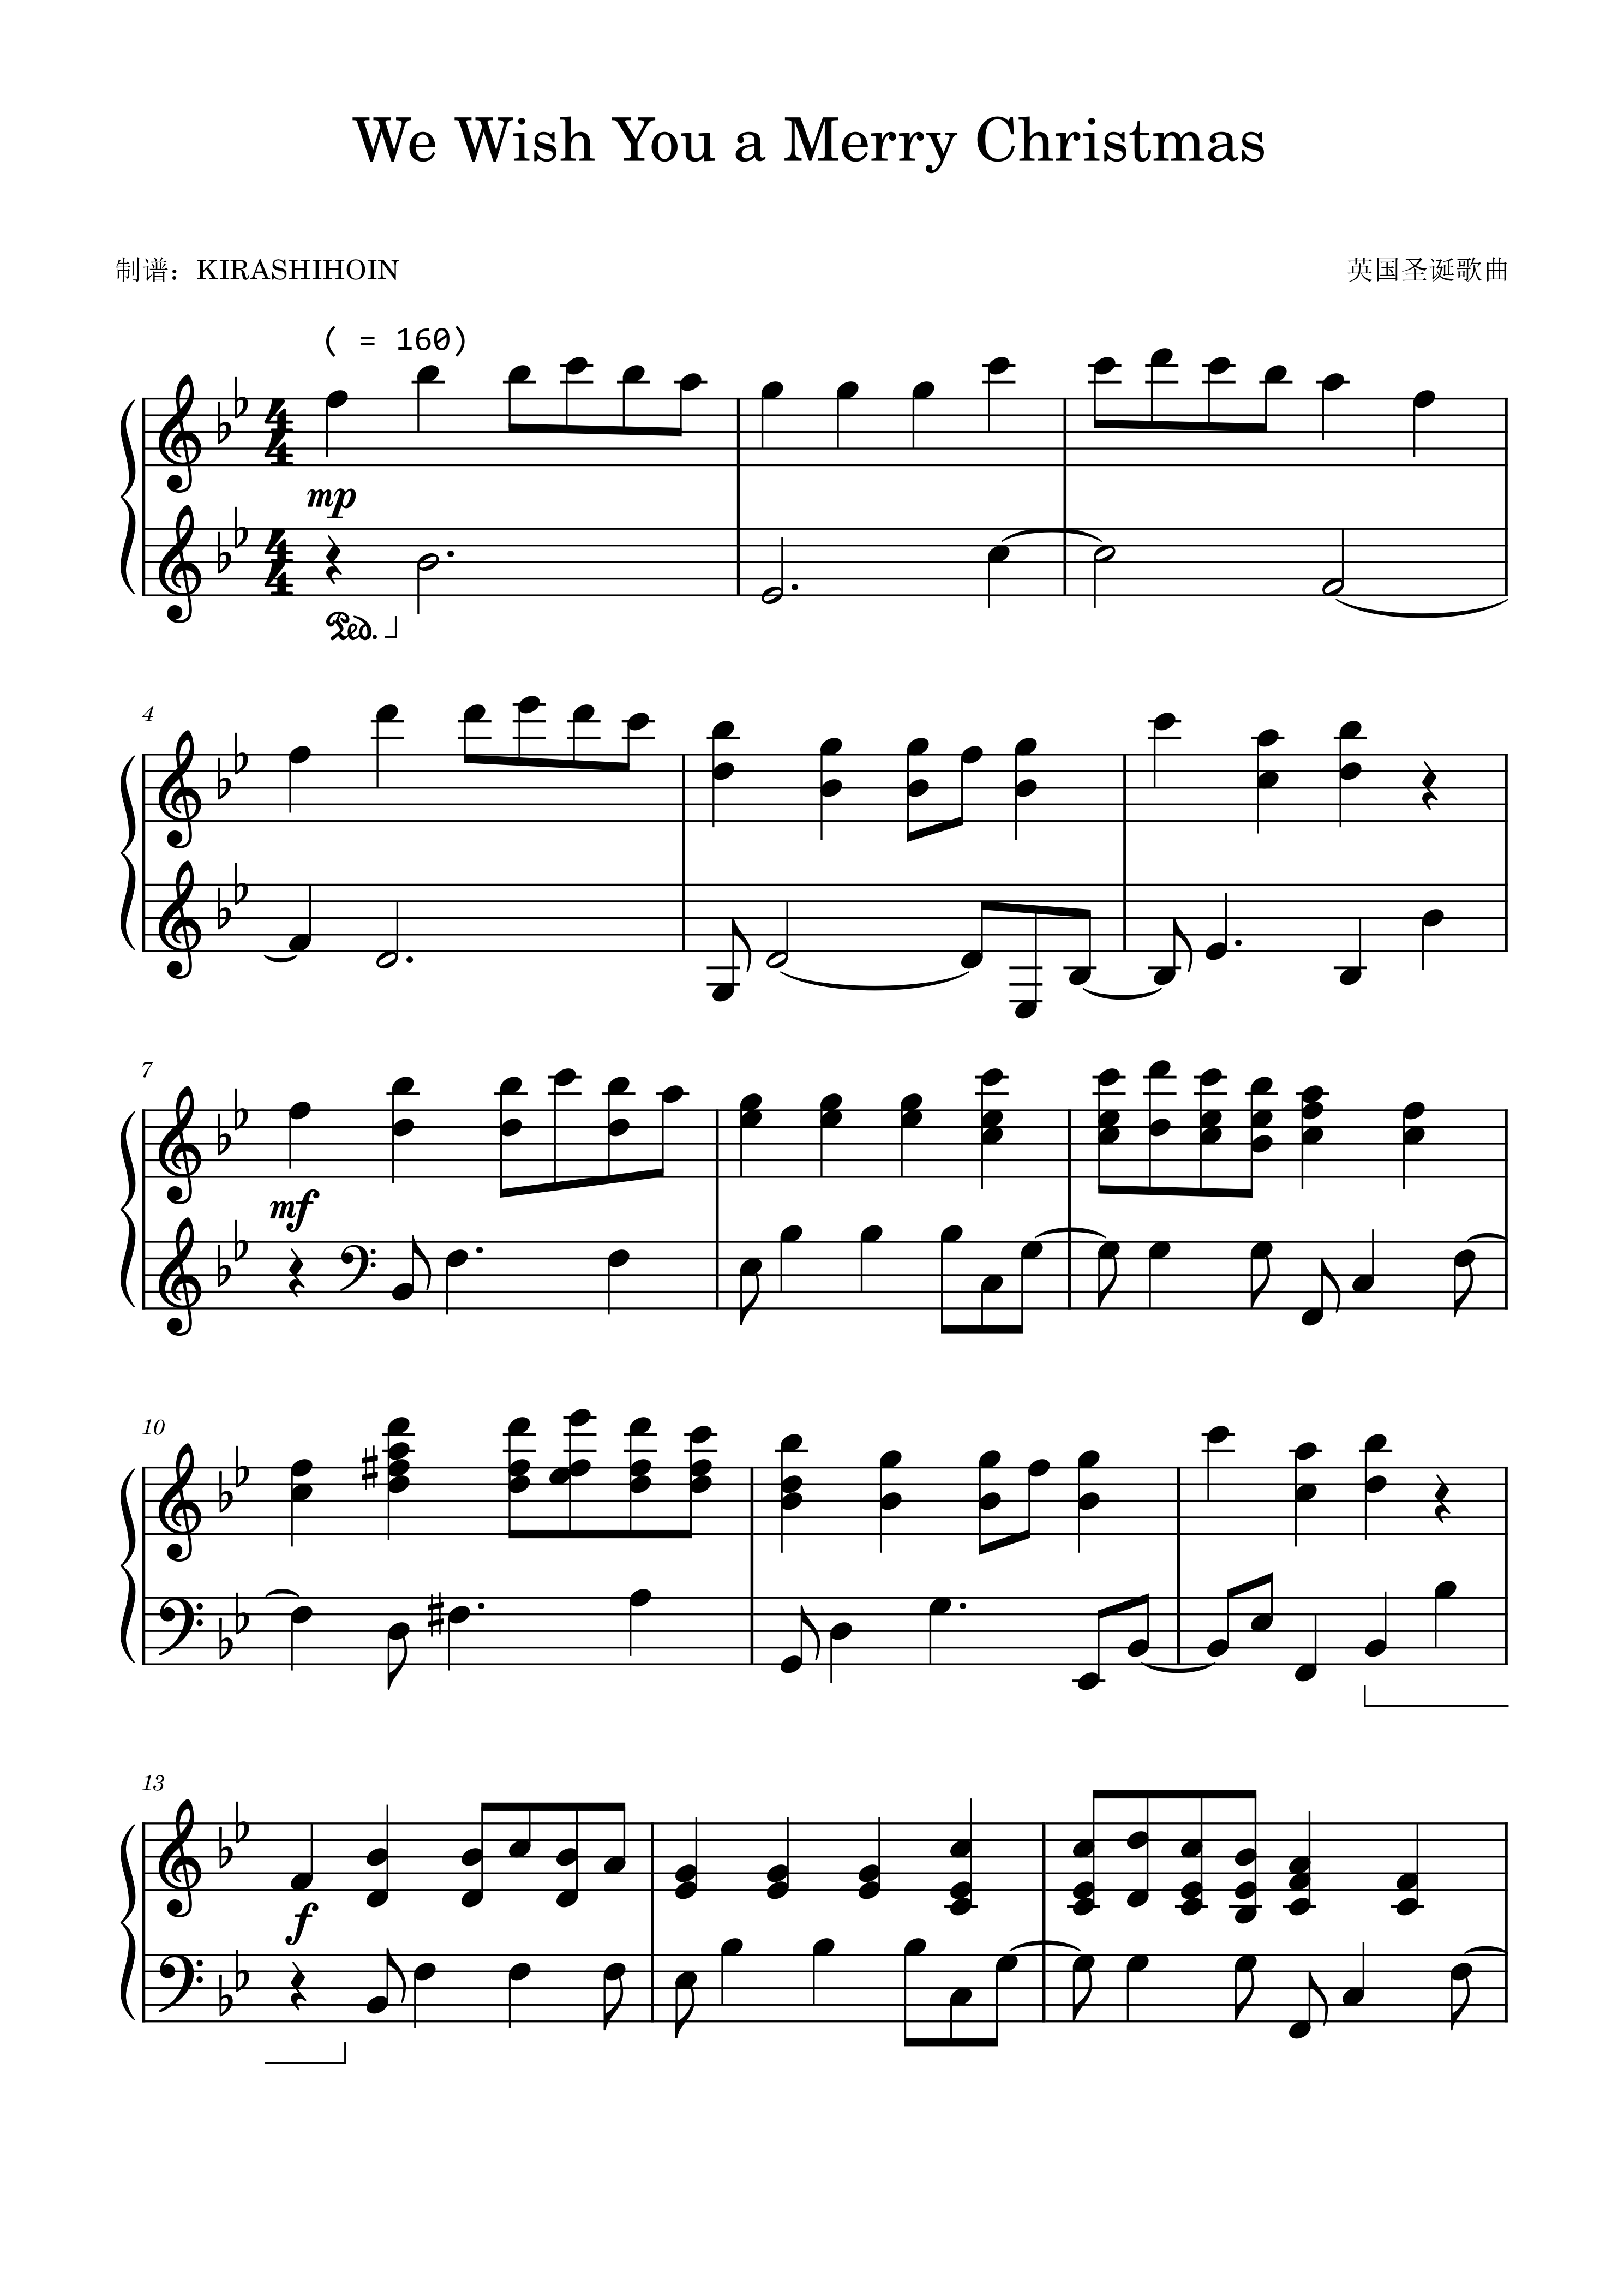 We wish you a merry christmas Sheet music for Baritone Saxophone ...